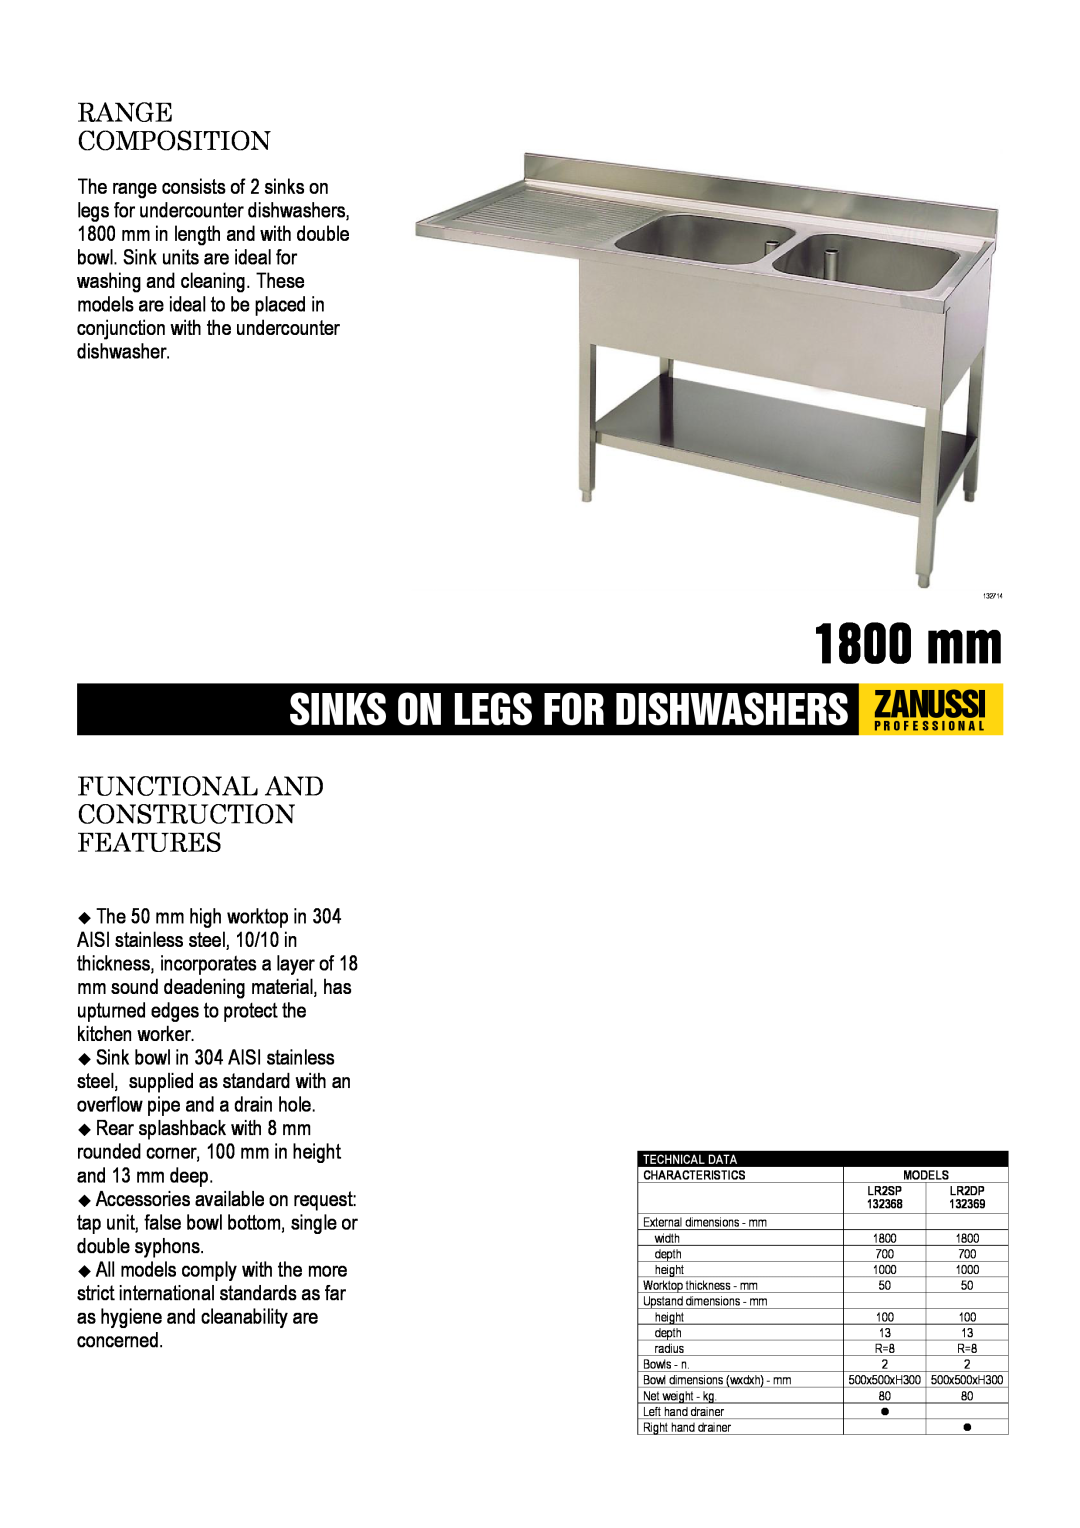 Zanussi LR2DP, LR2SP dimensions 1800 mm, Sinks On Legs For Dishwashers Zanussip R O F E S S I O N A L, Range Composition 